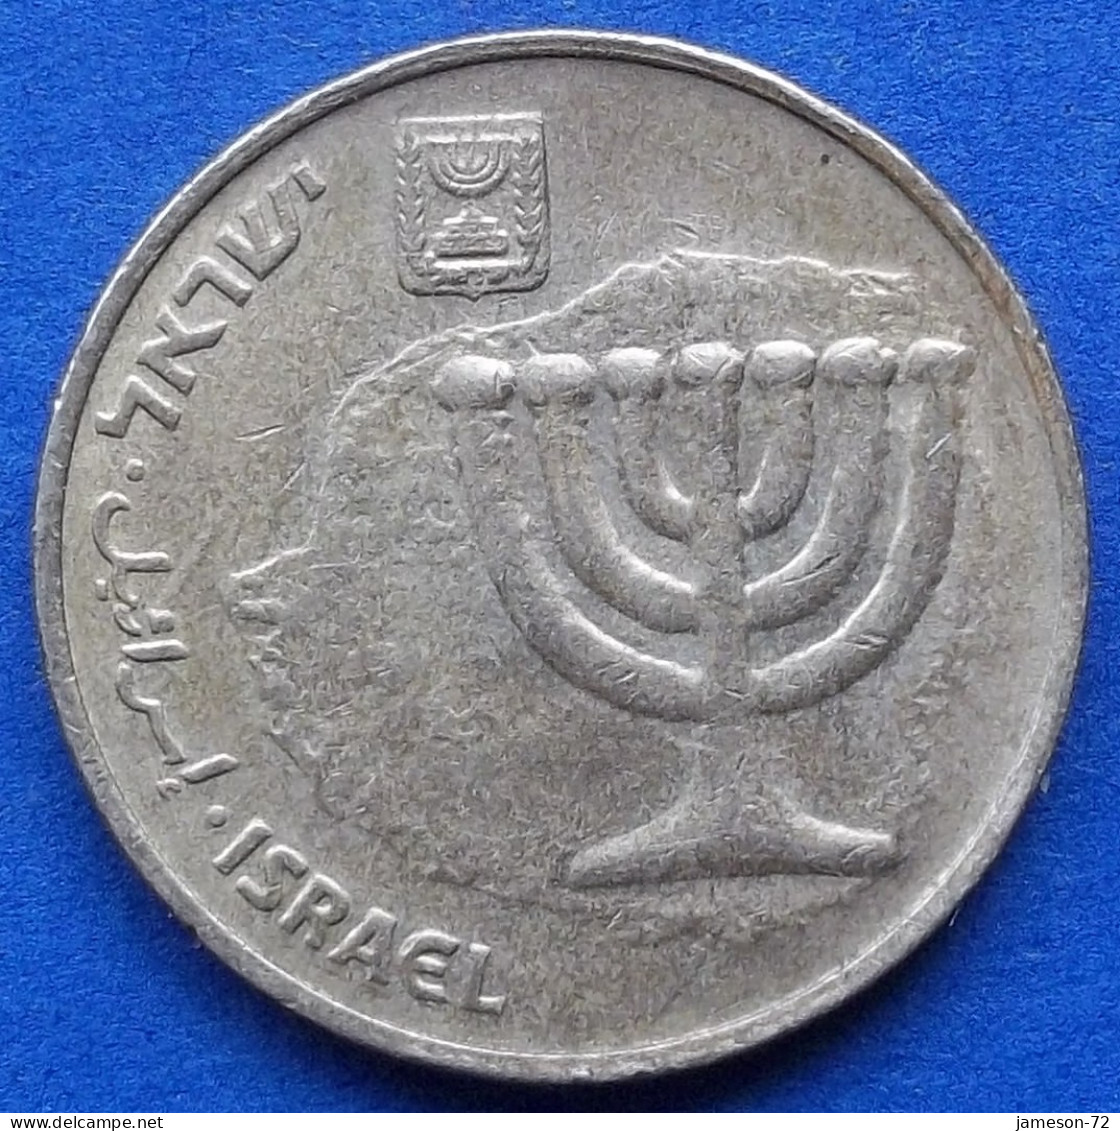 ISRAEL - 10 Agorot JE 5756 (1996AD) "Menorah" KM# 158 Monetary Reform (1985) - Edelweiss Coins - Israel